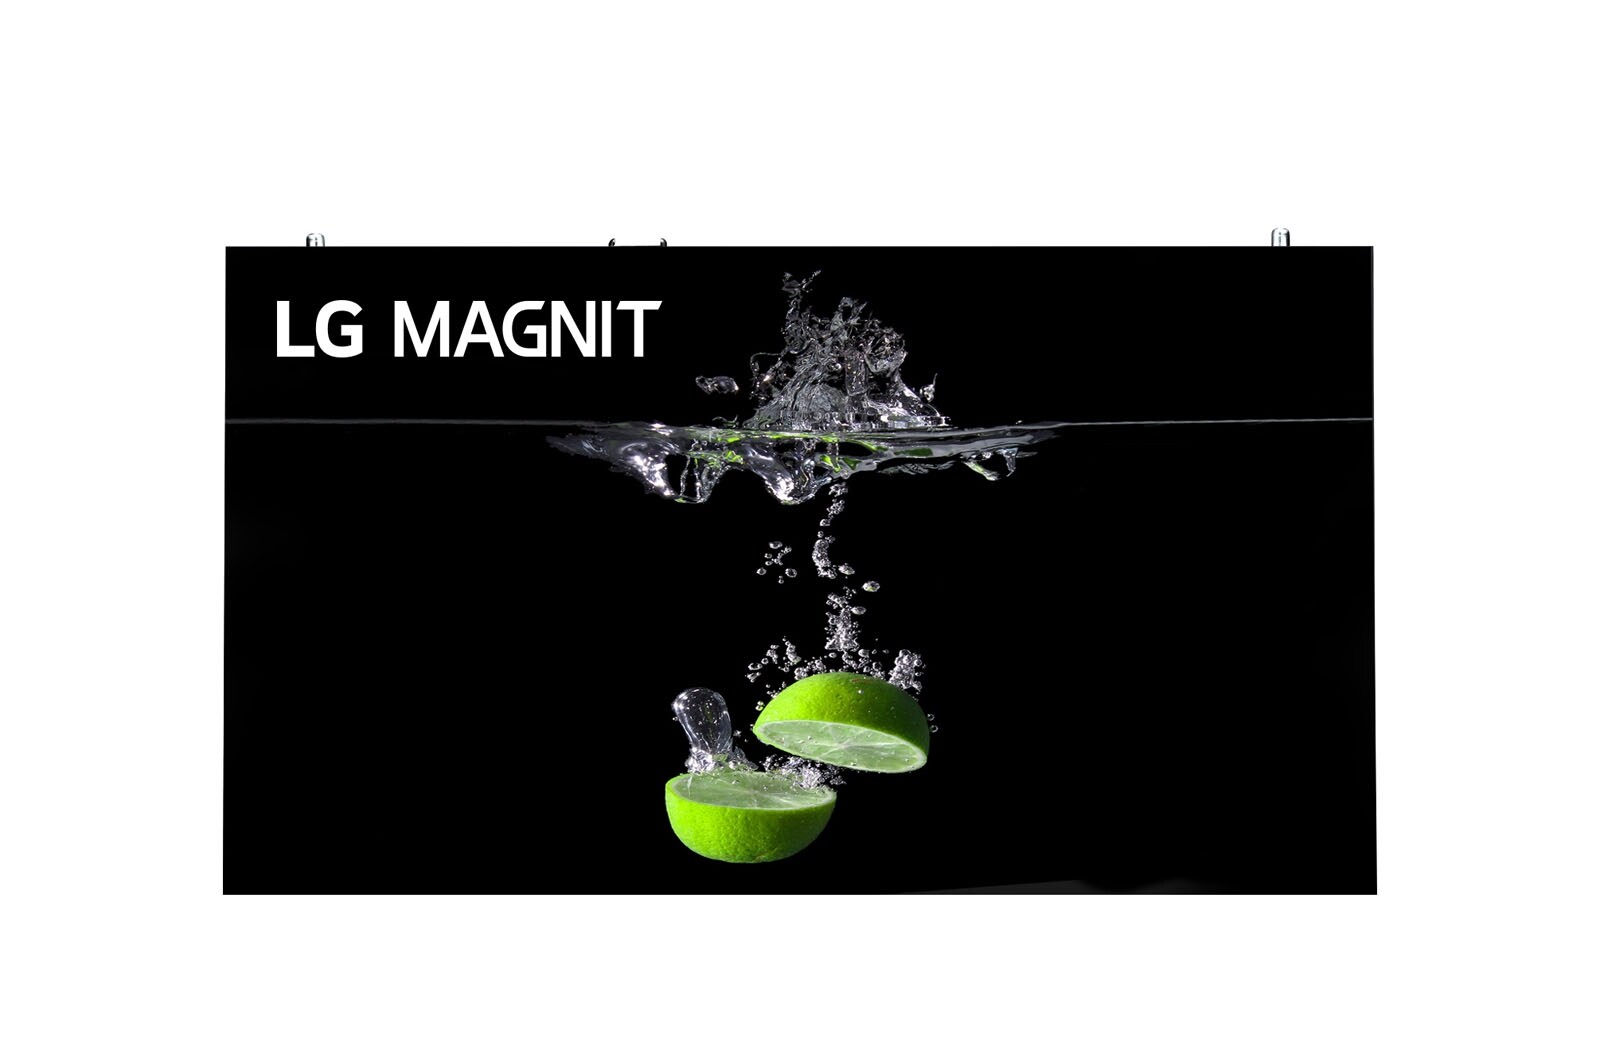 LG MAGNIT, LSAB009-M13